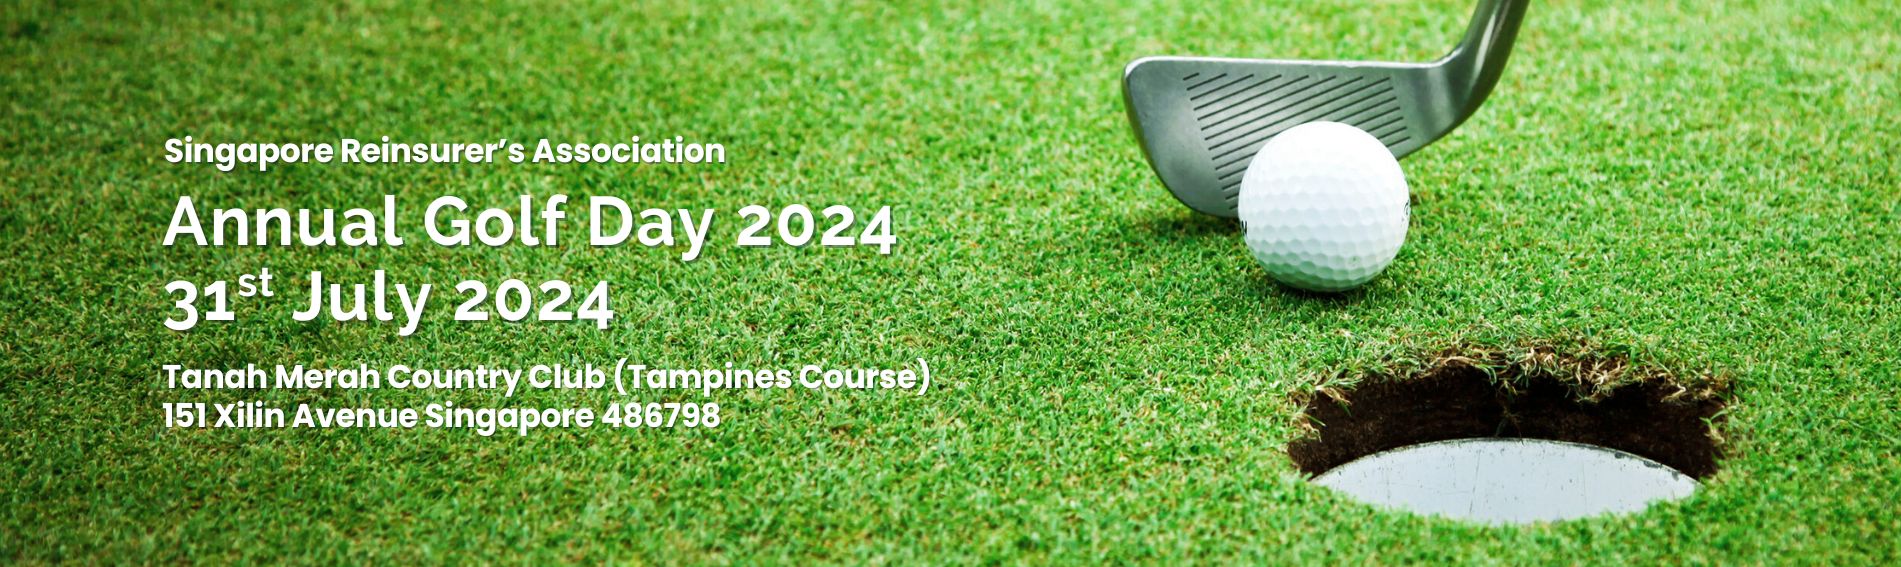 Annual Golf Day 2024